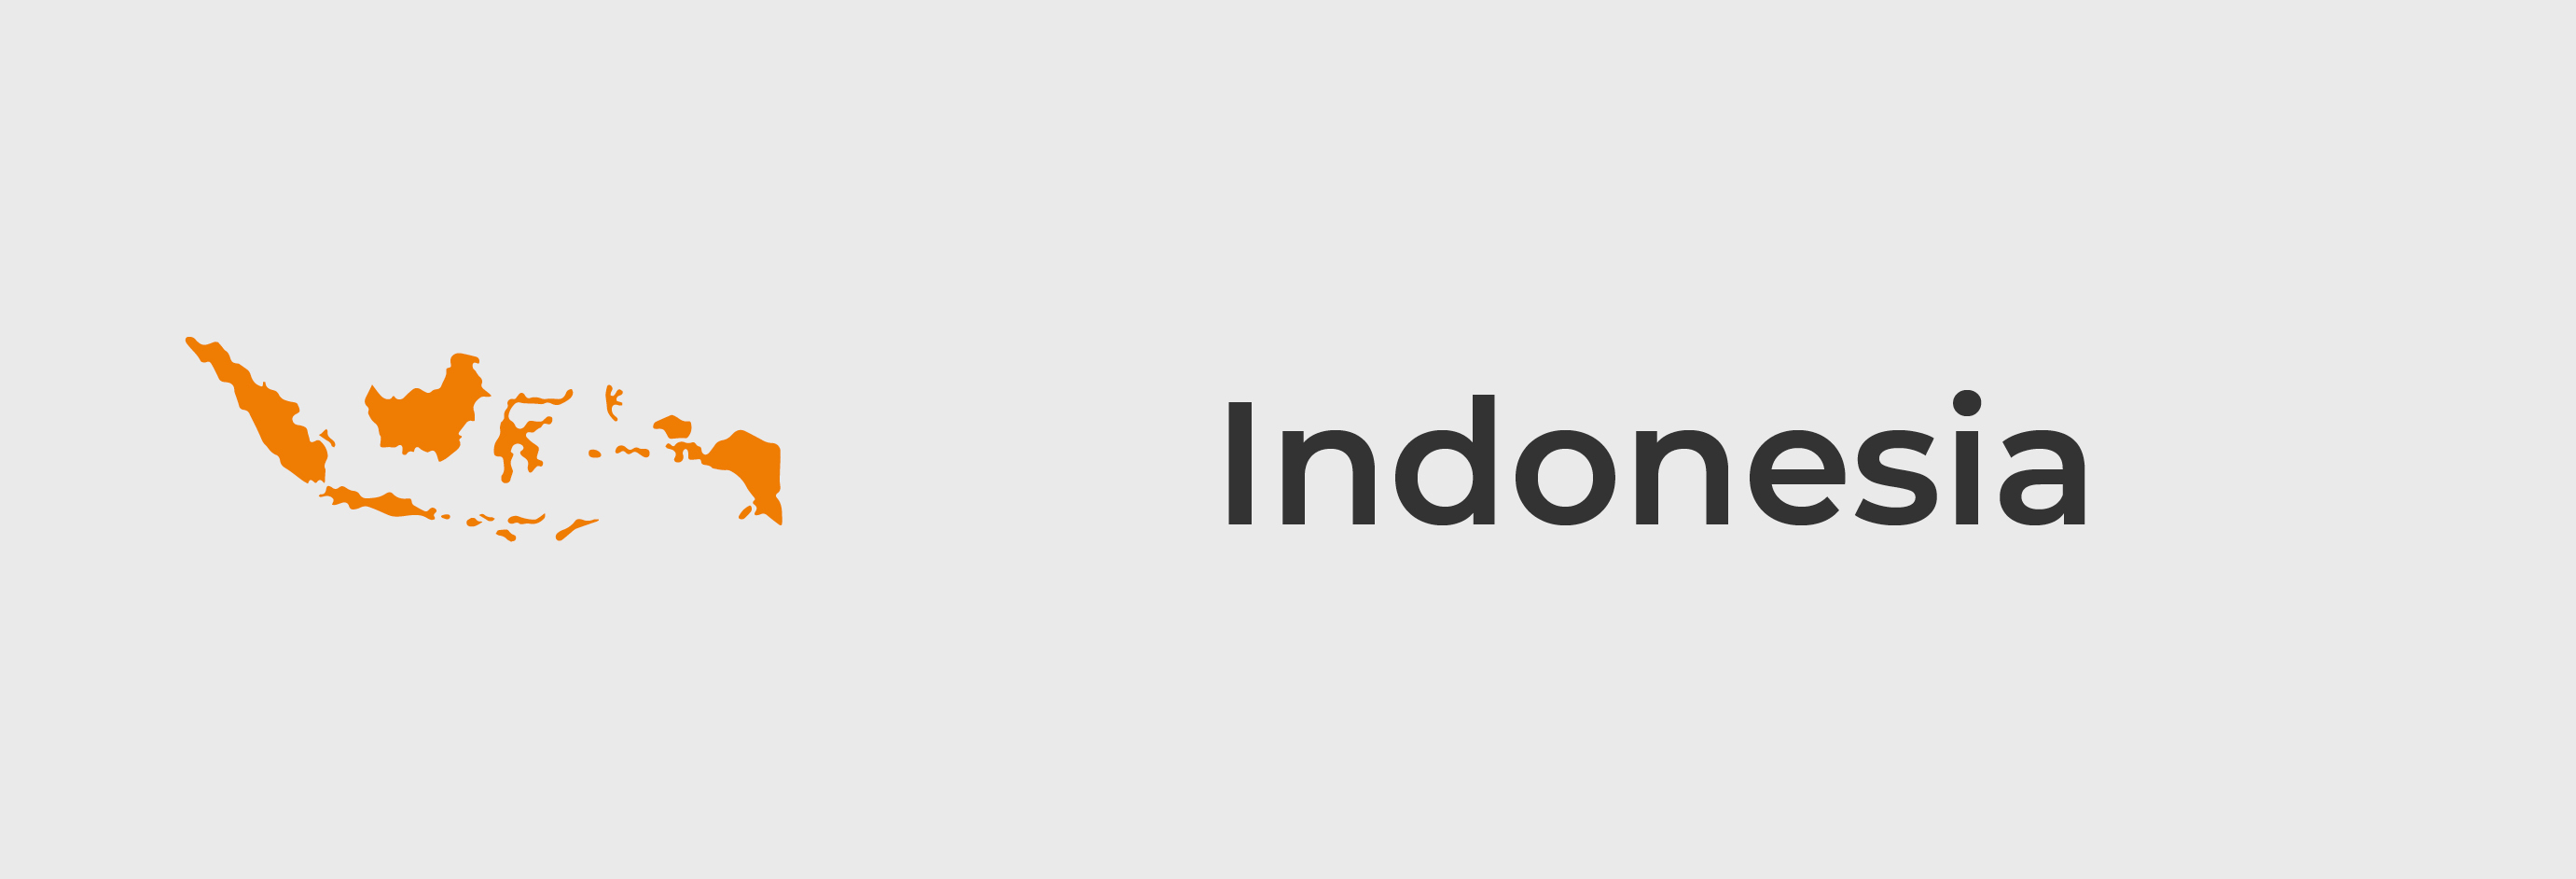 /cms/uploads/image/file/528926/Indonesia.jpg